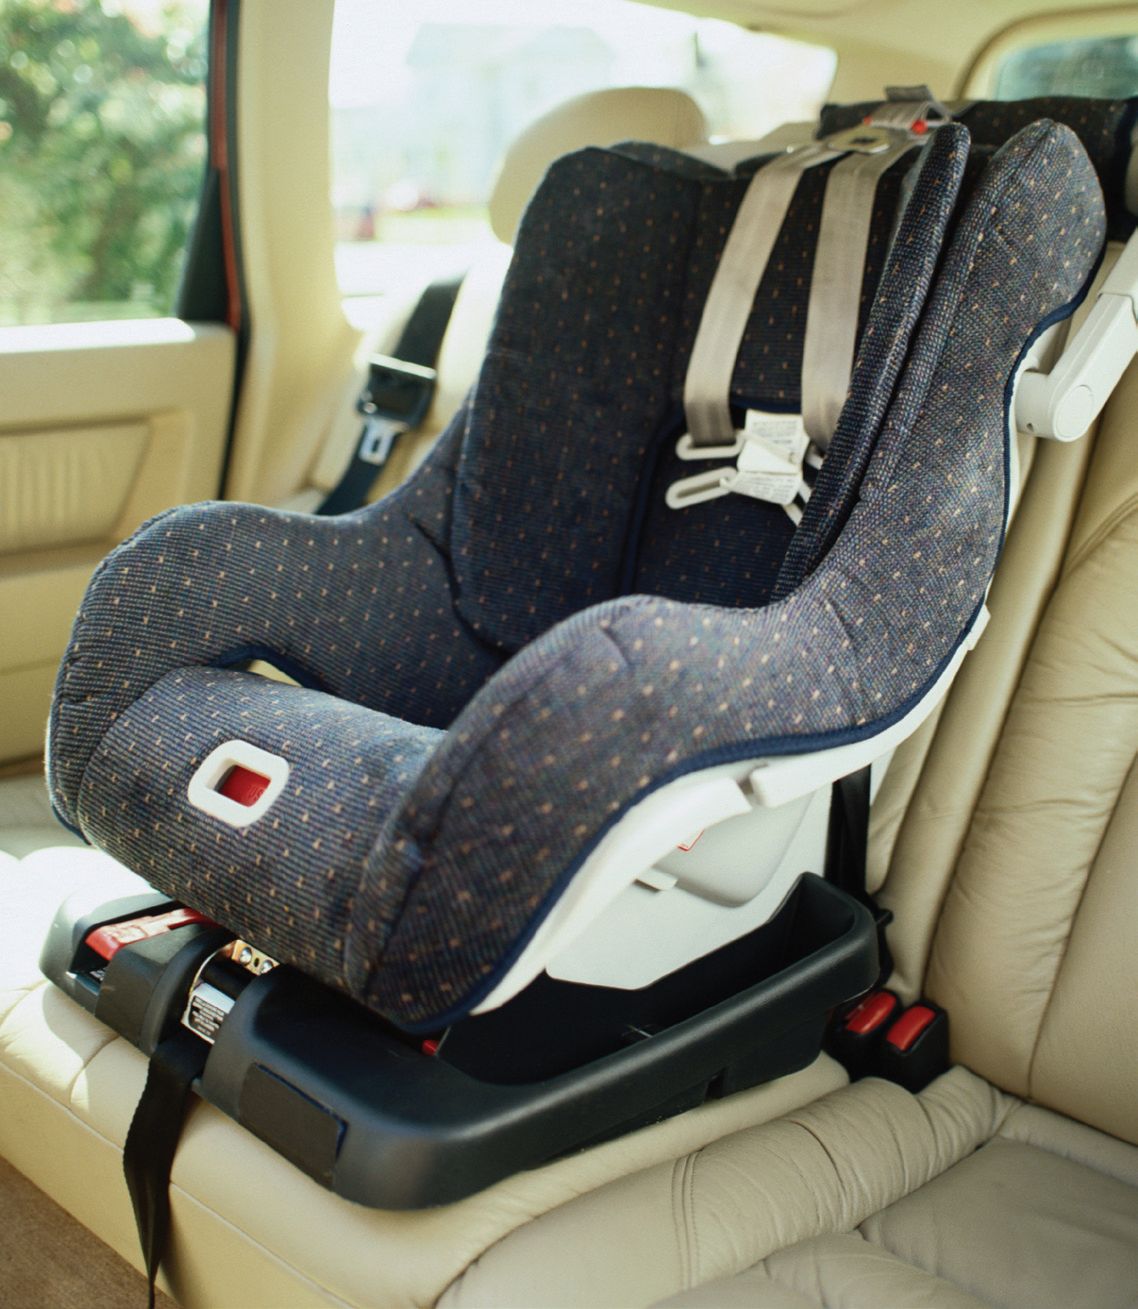 New Car Seat Regulations In Nj Take Effect September 1 The Lakewood Scoop